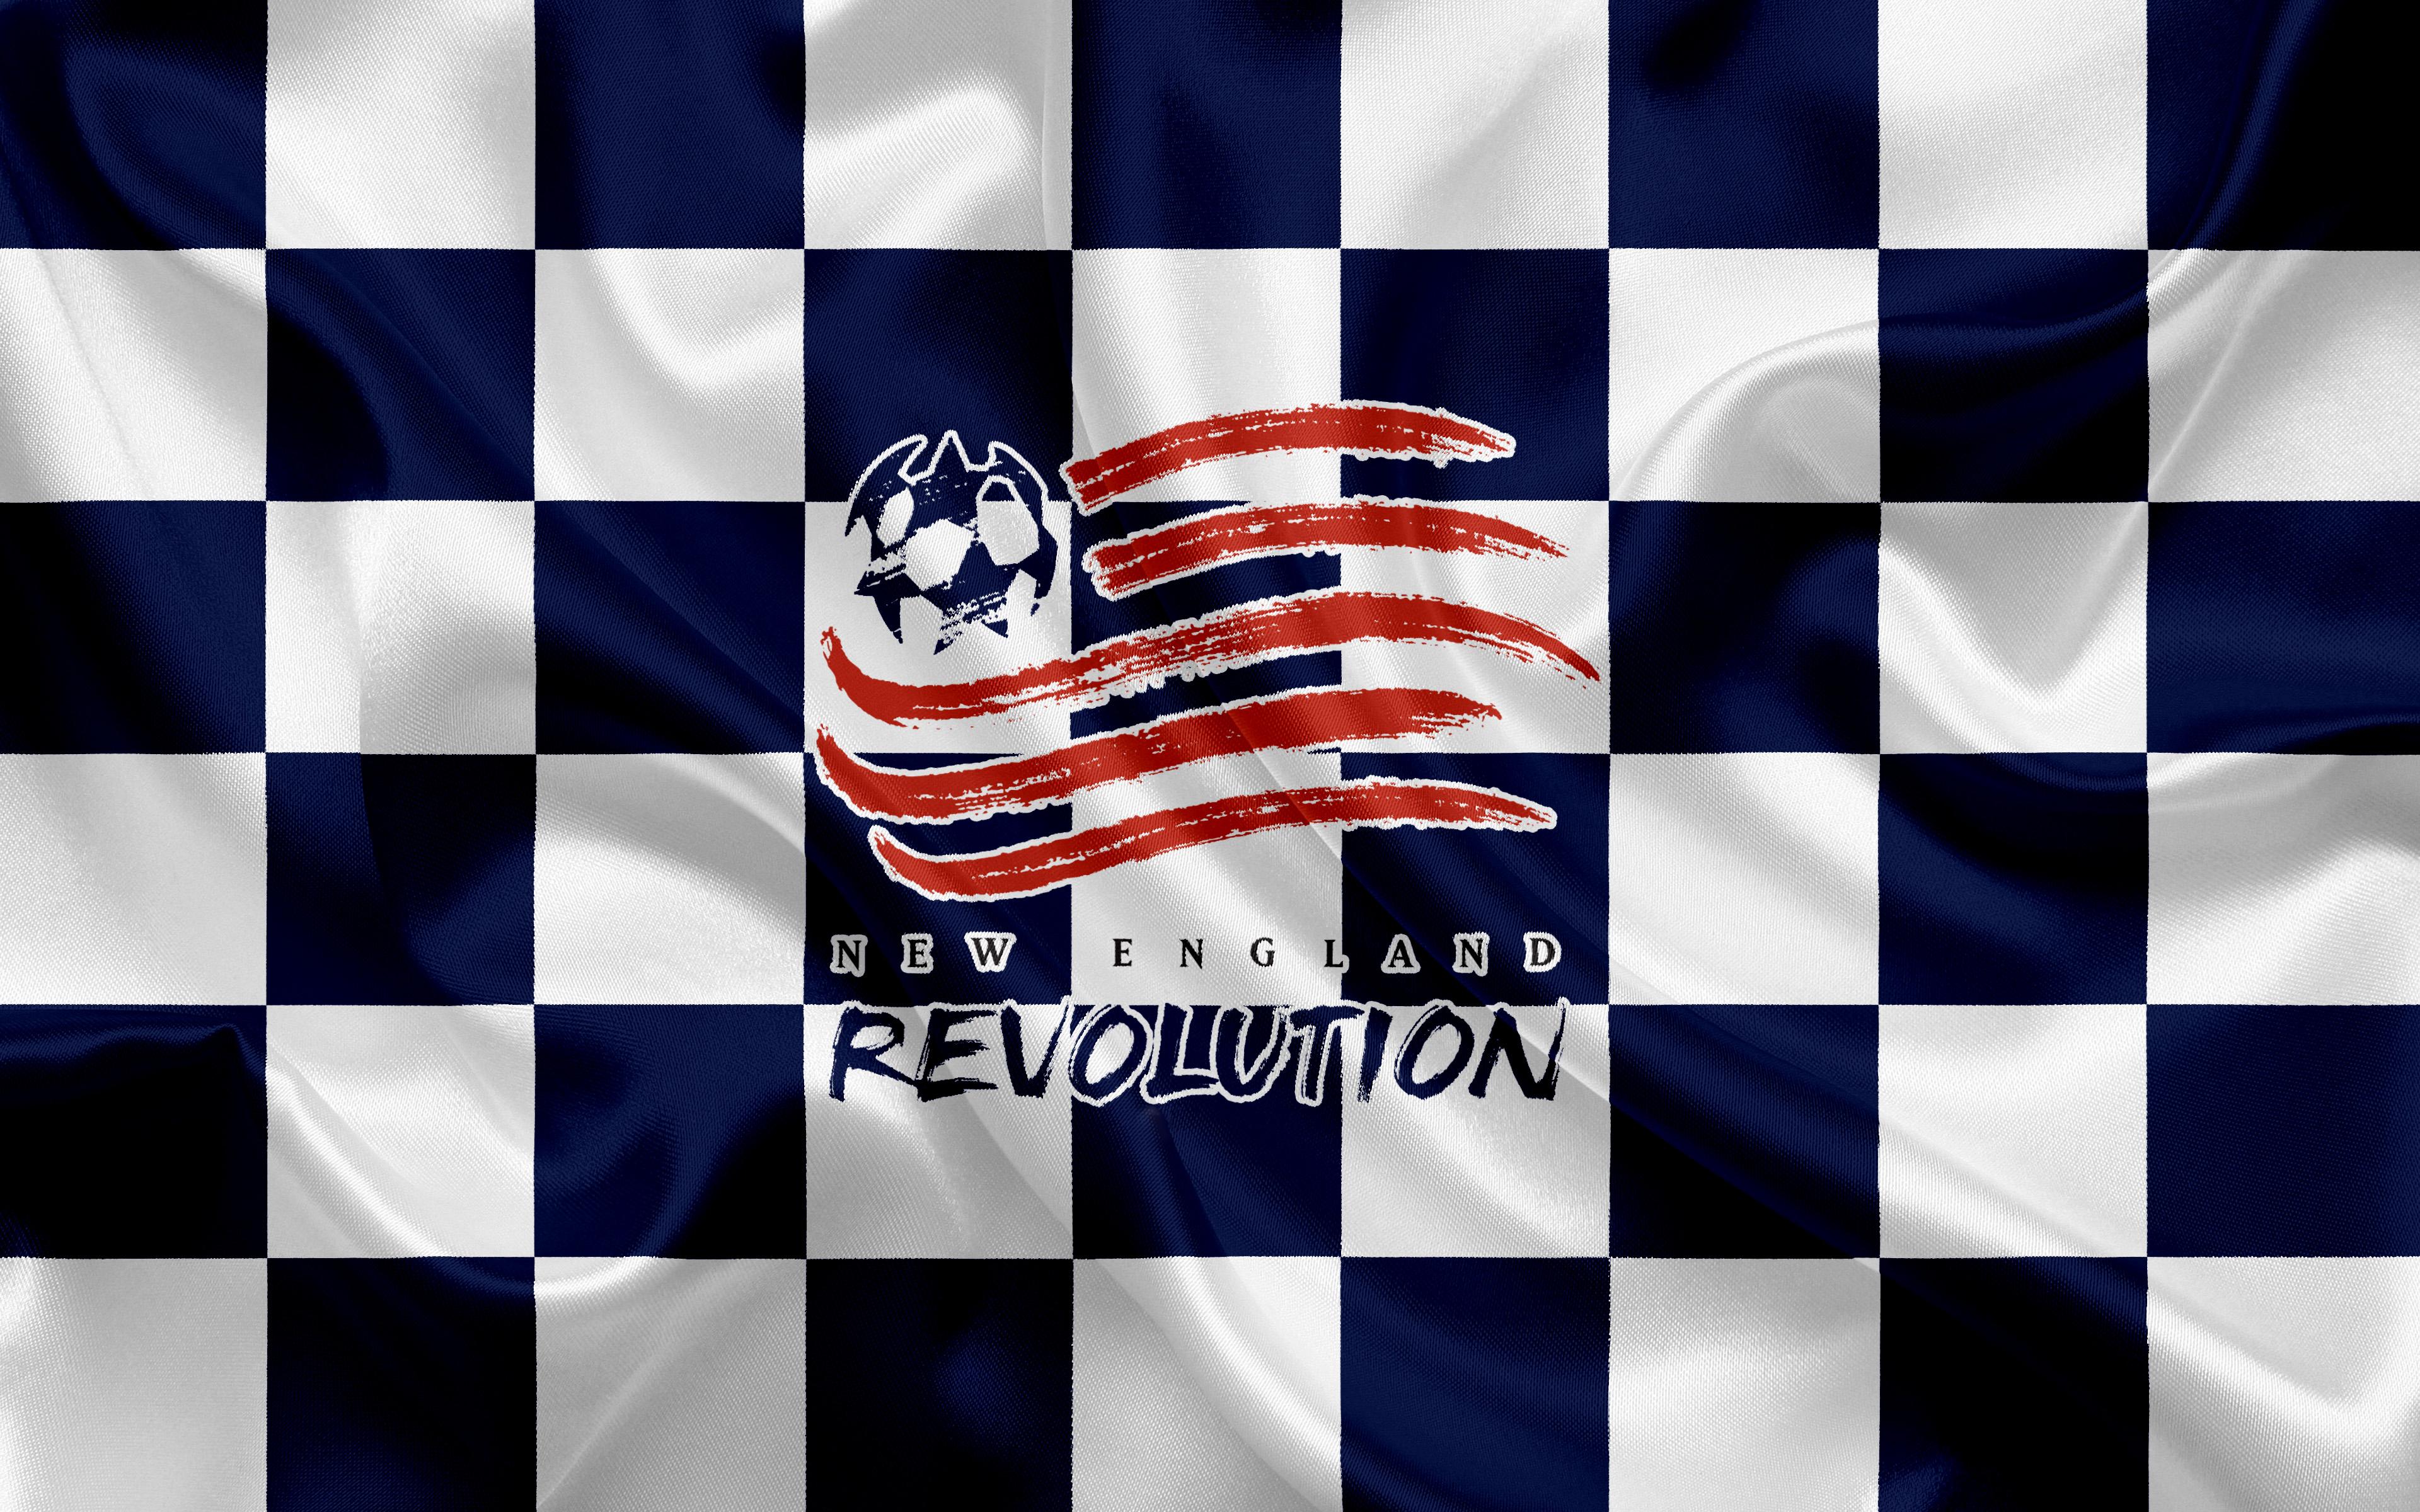 New England Revolution 4k Ultra HD Wallpaper. Background Image